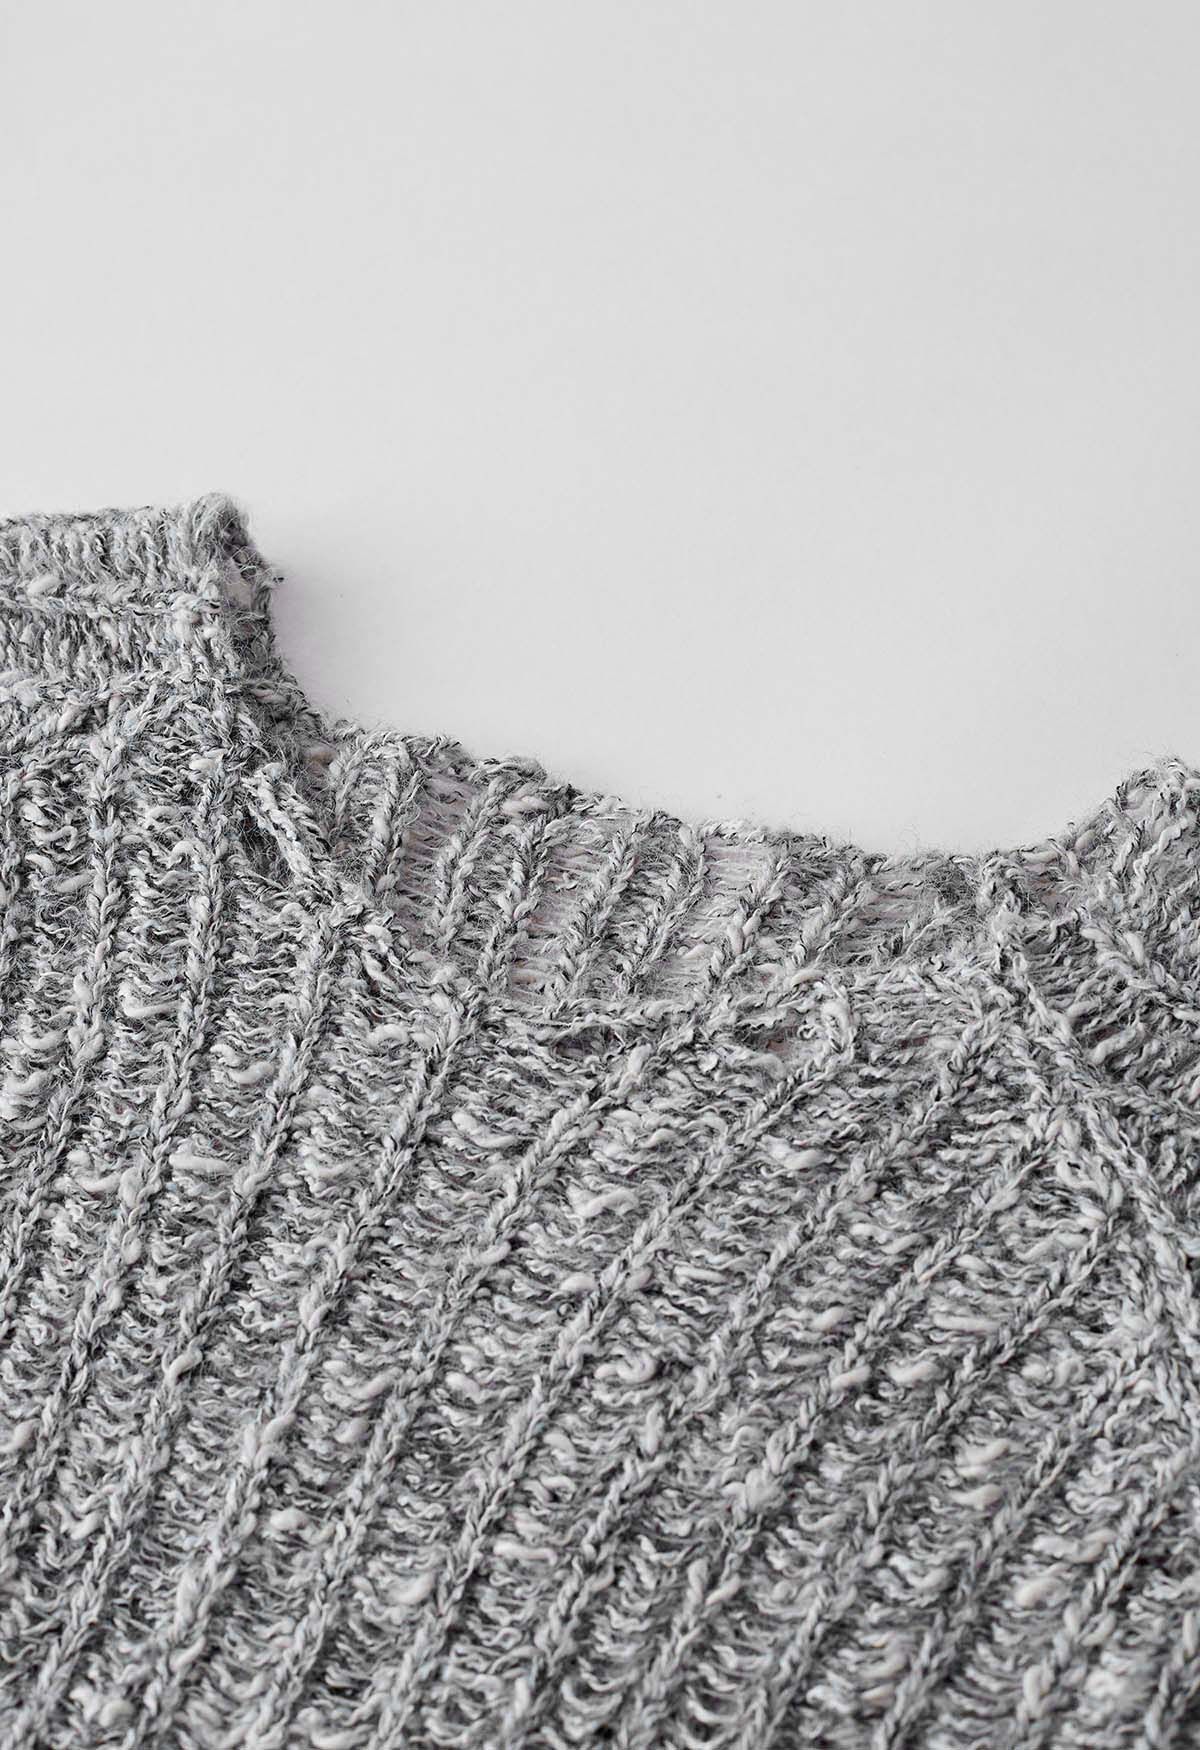 Raw Cut Edge Rip Knit Sweater in Grey